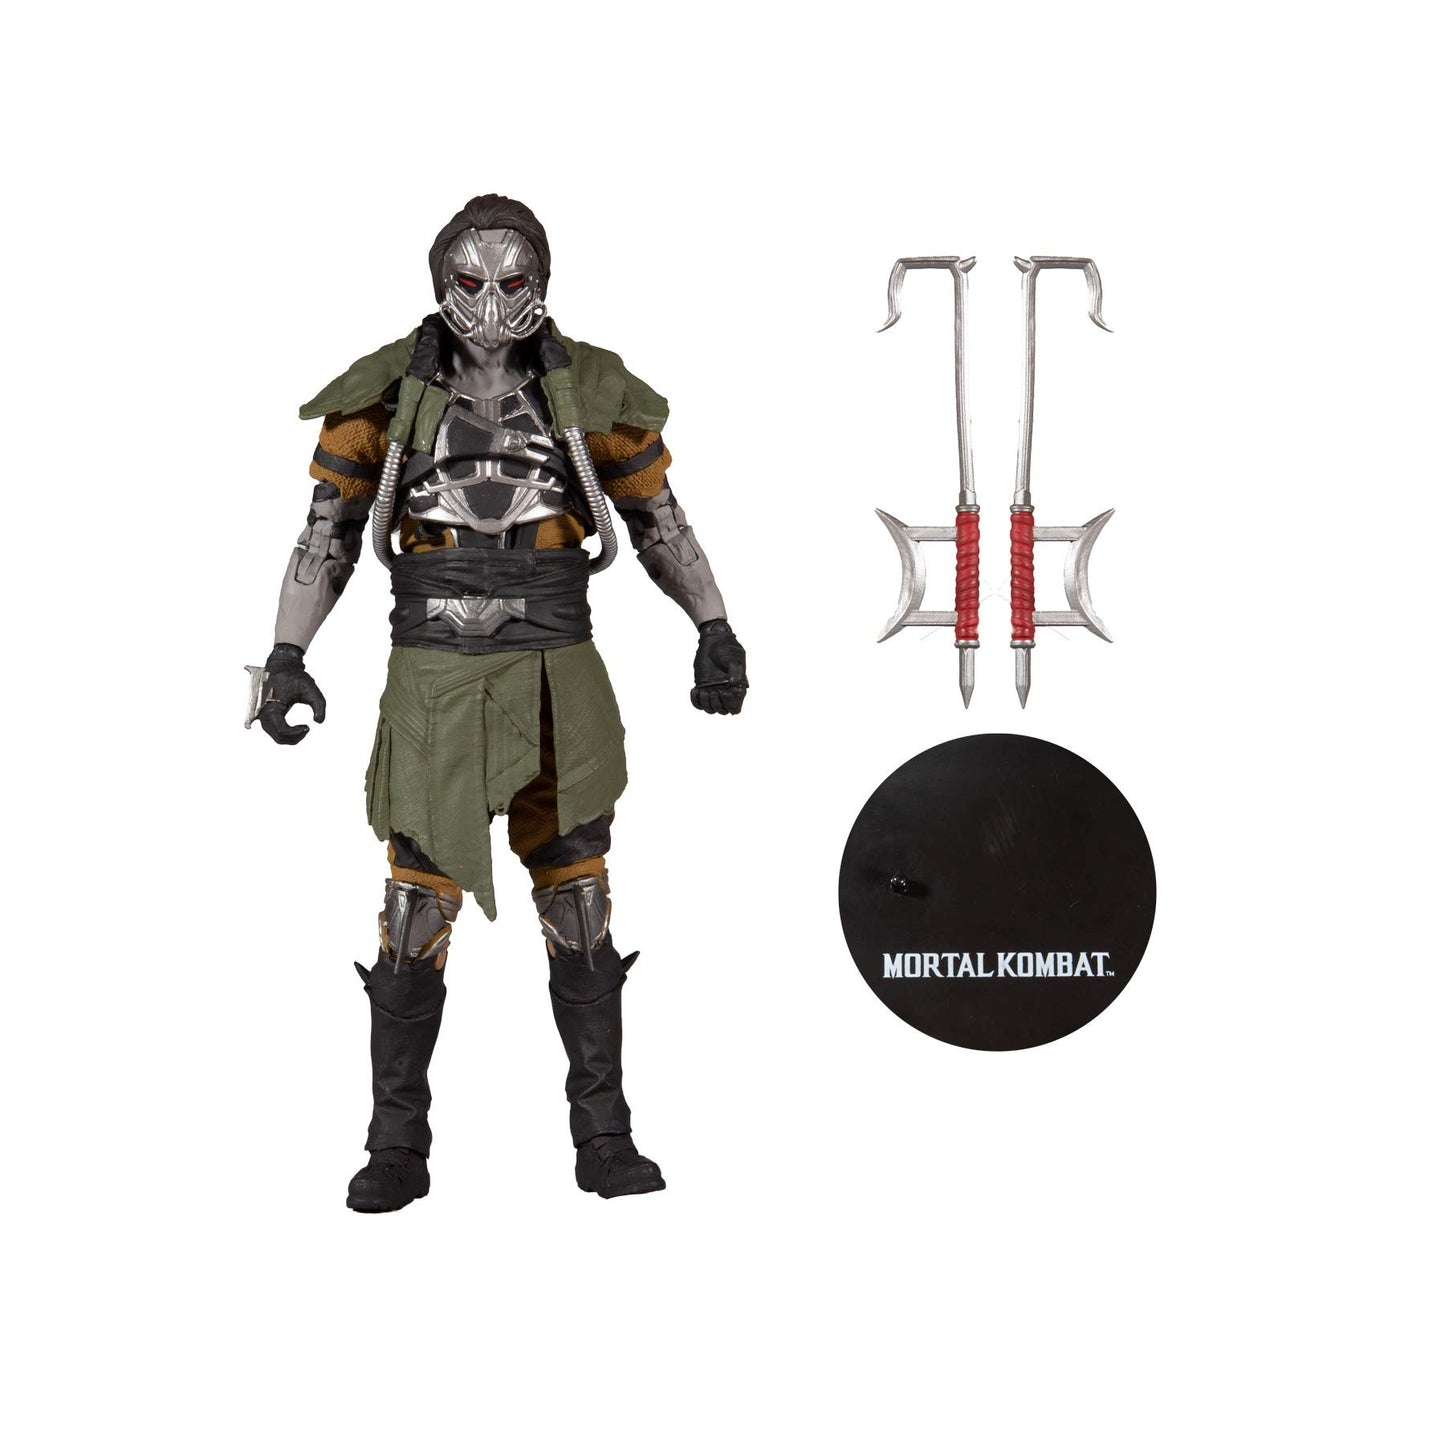 McFarlane Toys - Mortal Kombat - Kabal: Hooked Up Skin 7"" Action Figure, Multicolor (11047-0)